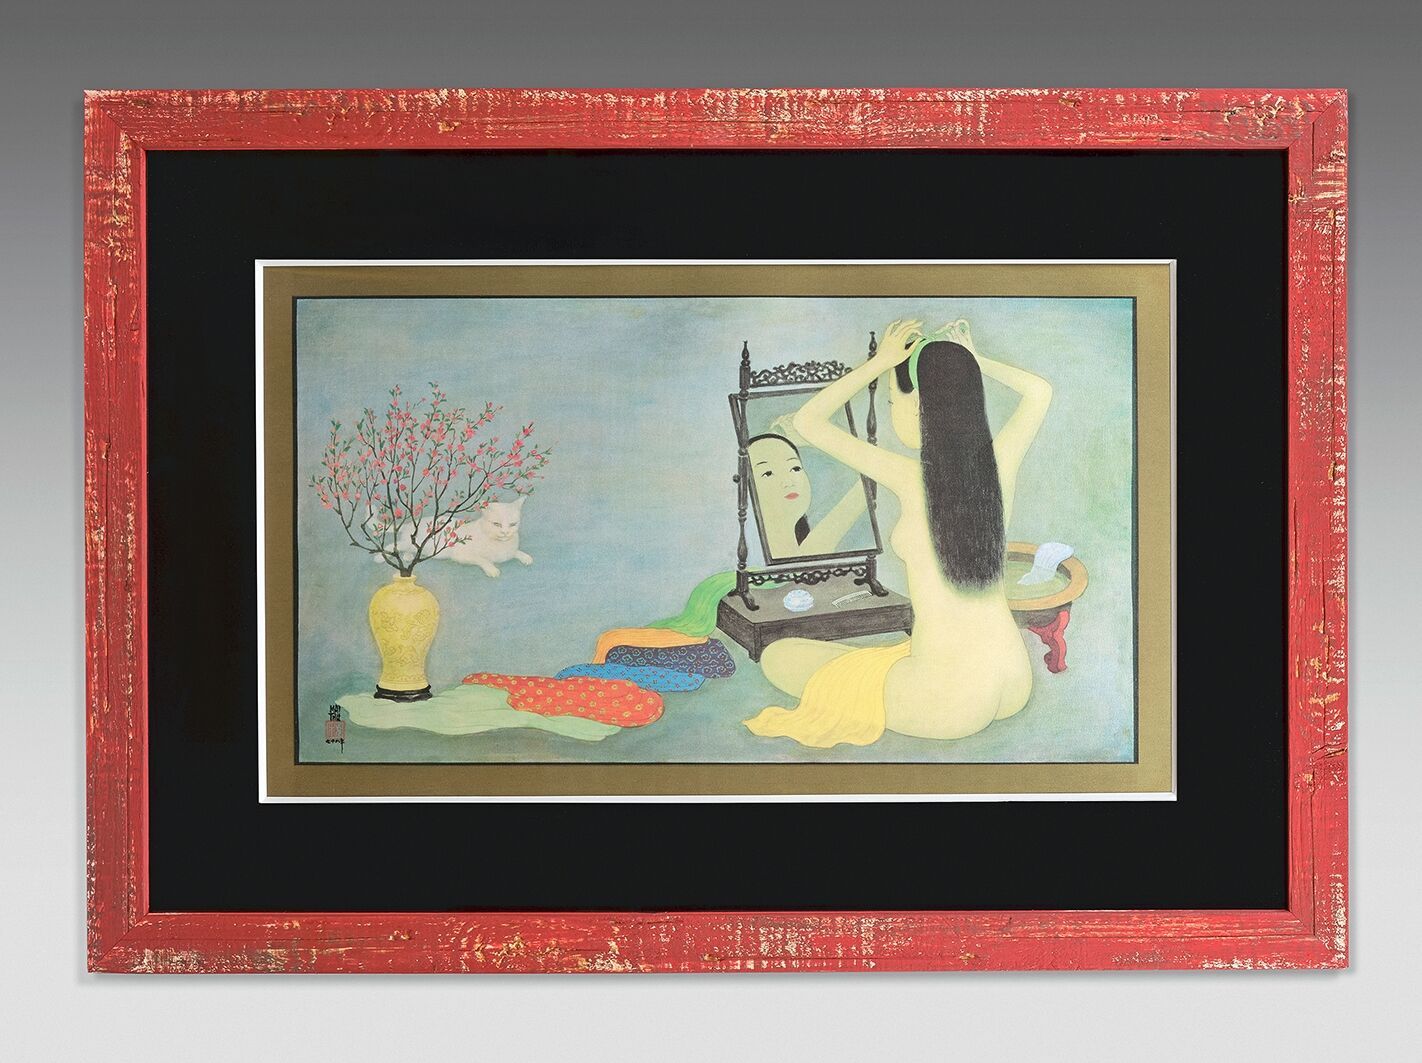 Null 仲秋梅，又名梅图（1906-1980）。

与猫在一起的裸体，印刷品，32.5 x 58厘米，边距约37 x 63厘米，漂亮的彩色丝绸印刷样张，未从画&hellip;